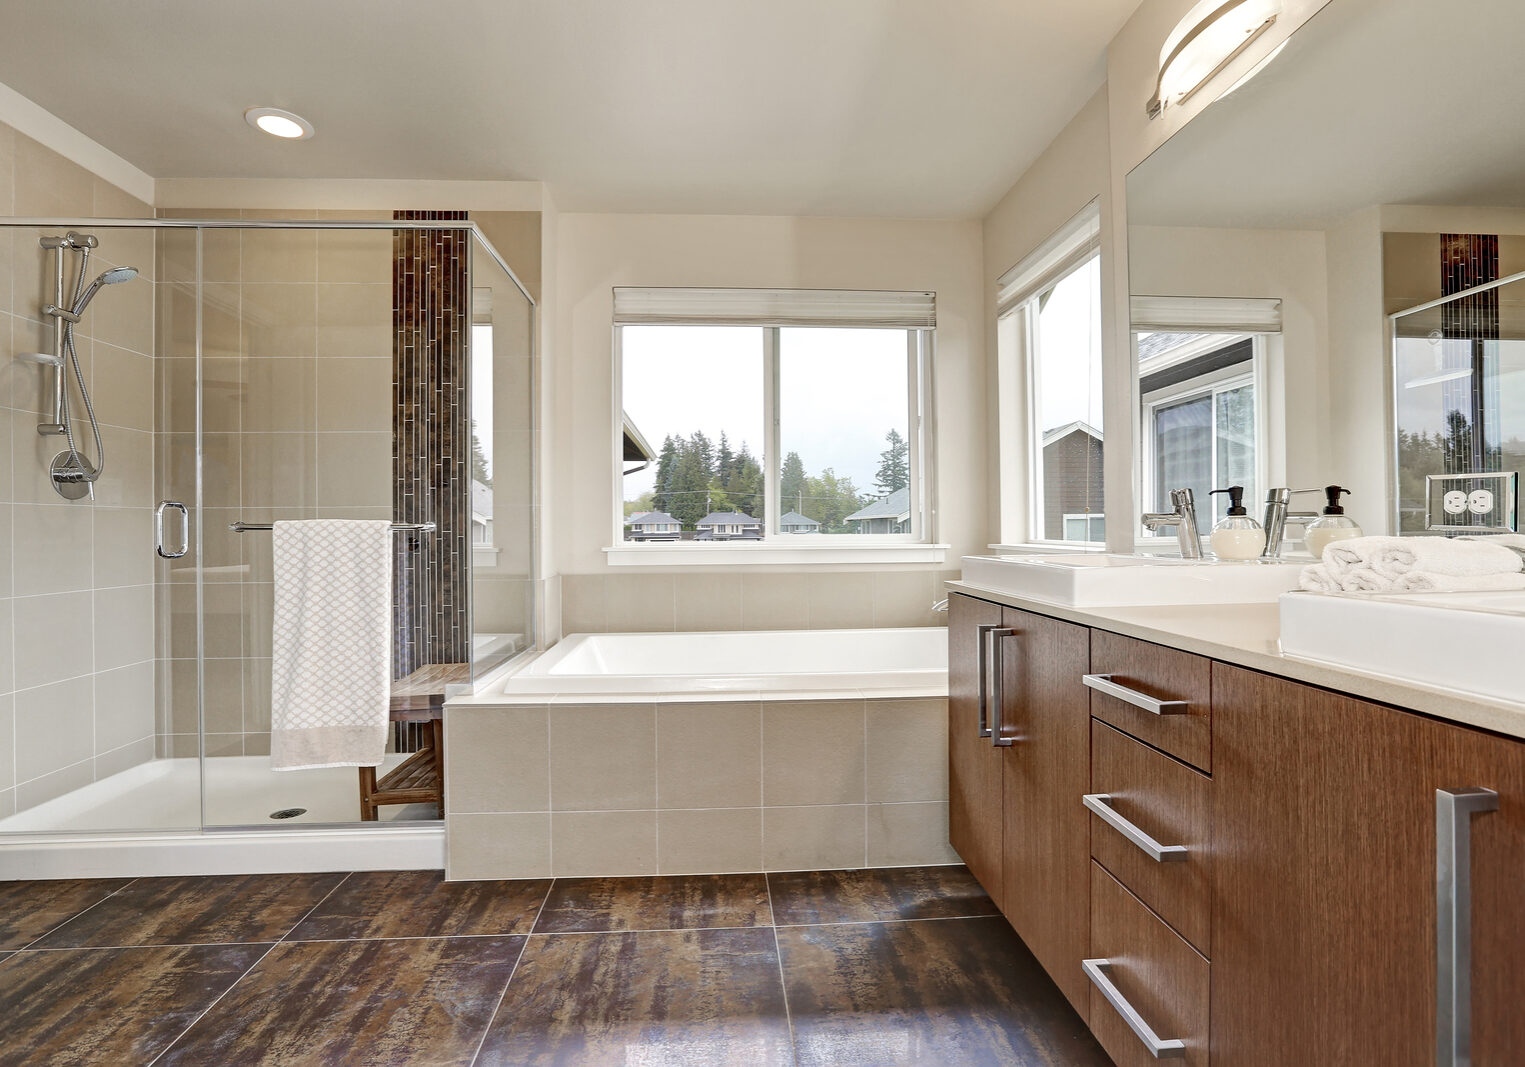 bigstock-White-Modern-Bathroom-Interior-155416736.jpg